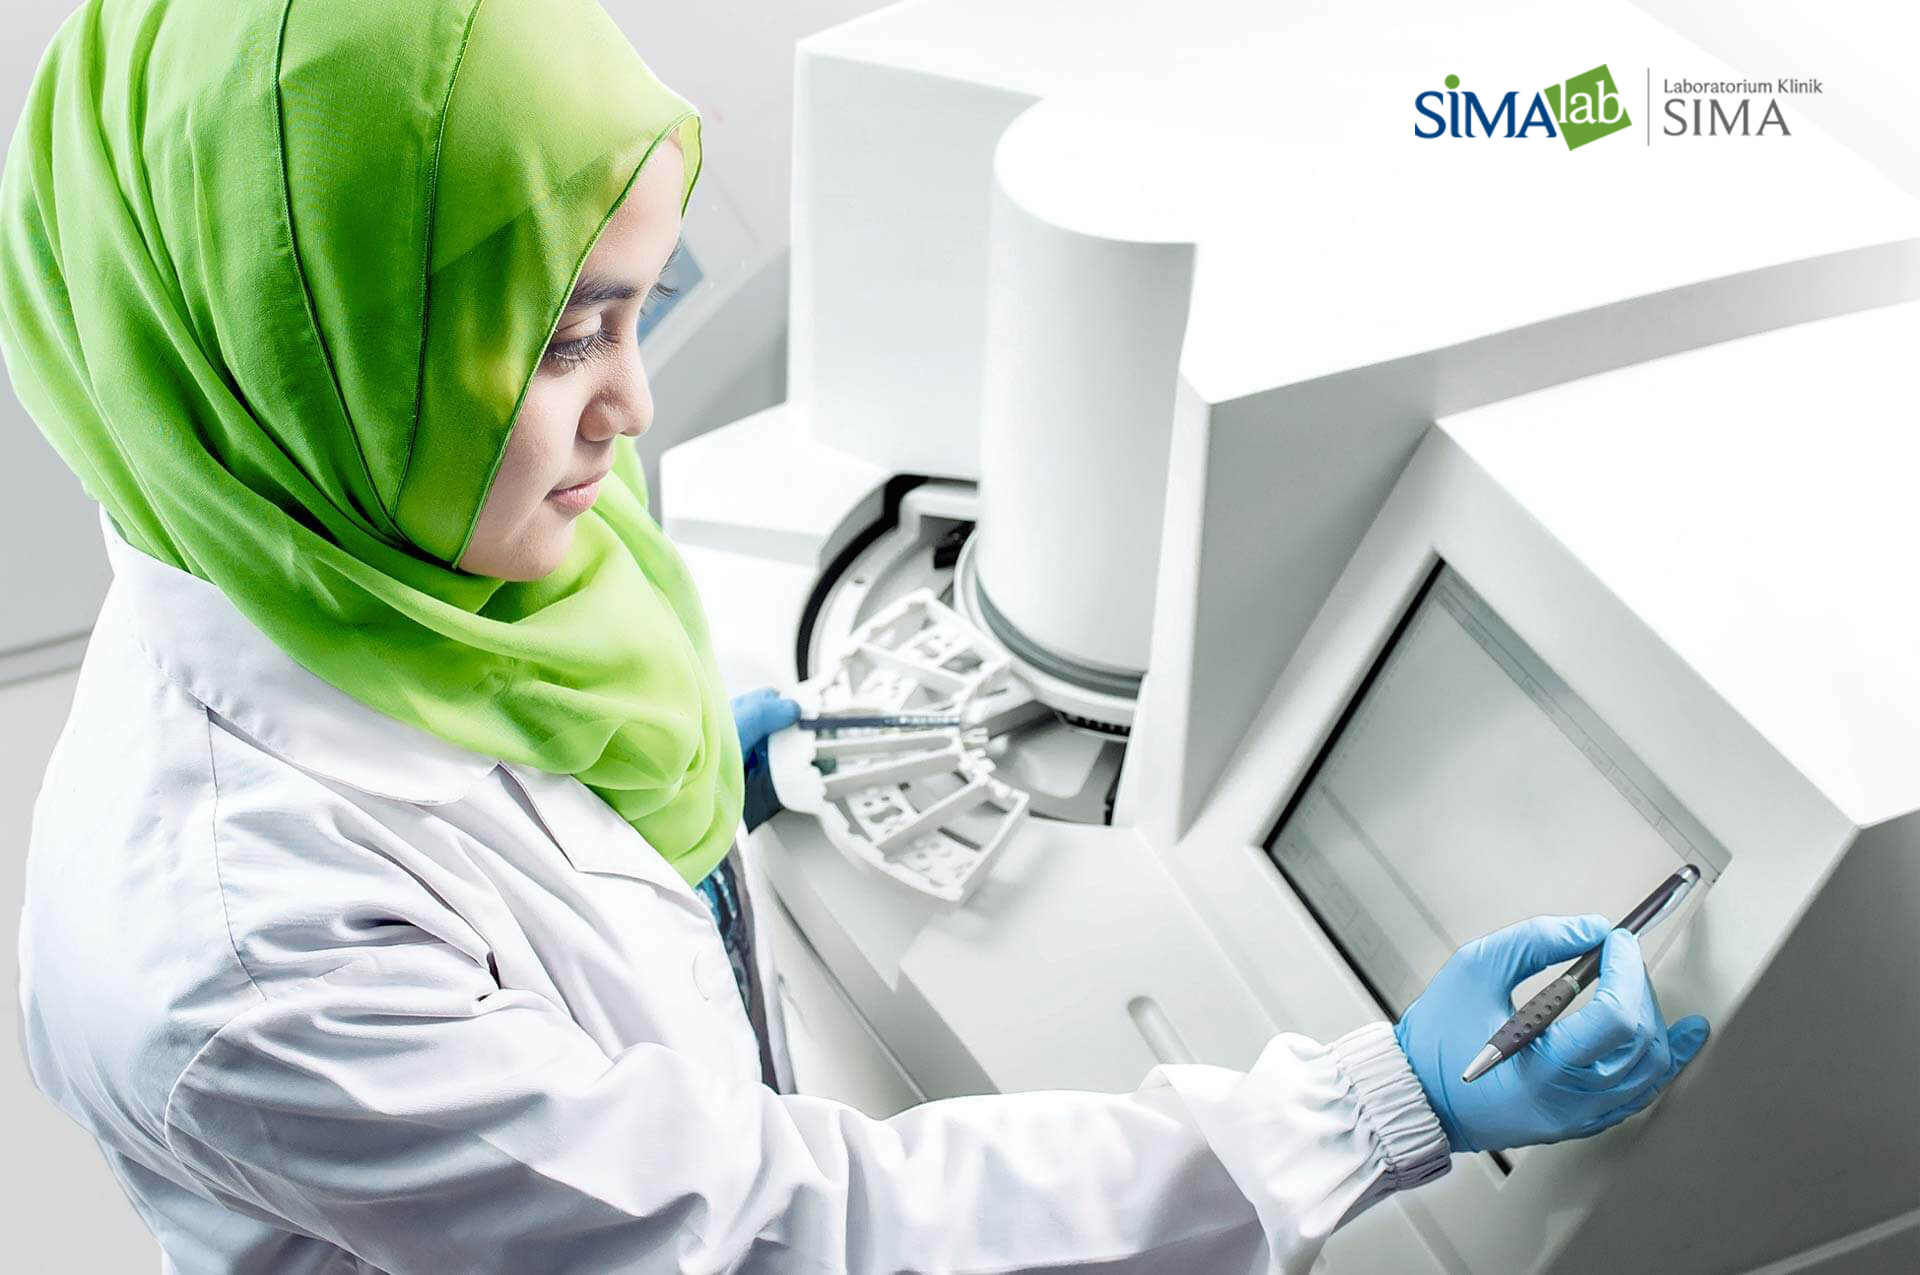 Laboratorium Klinik Sima Malang